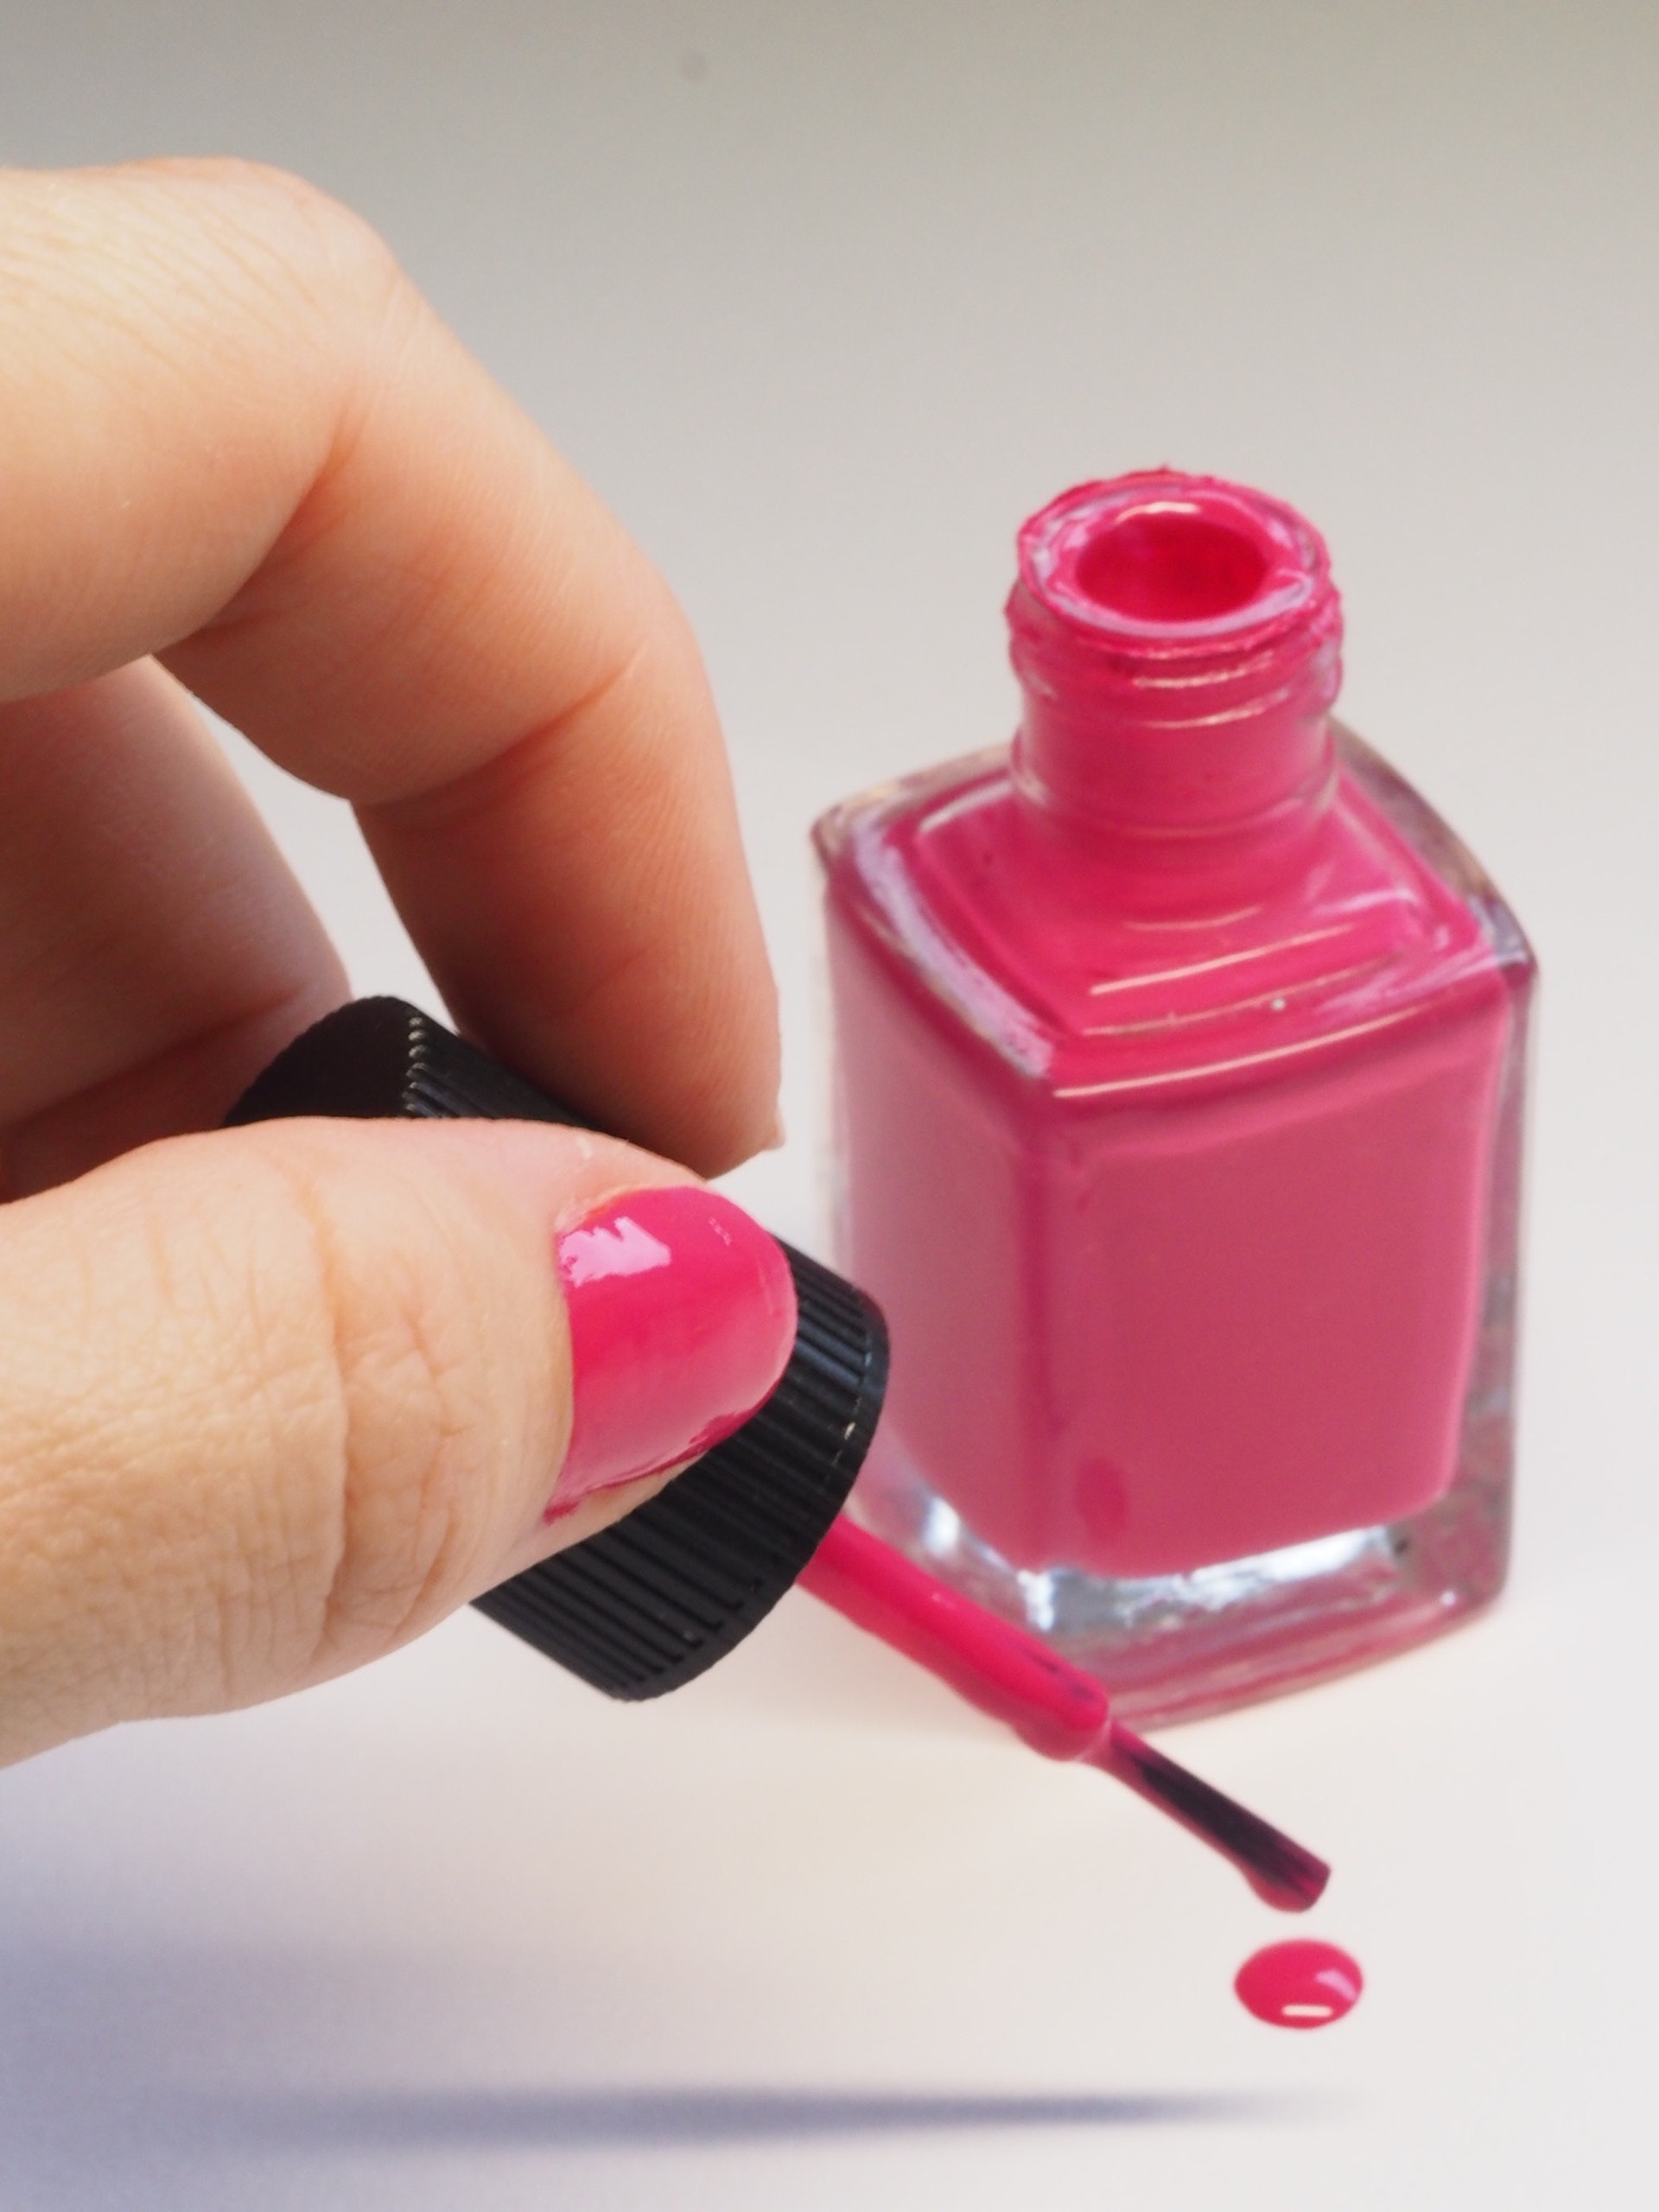 A pink nail polish bottle | Source: Pexels